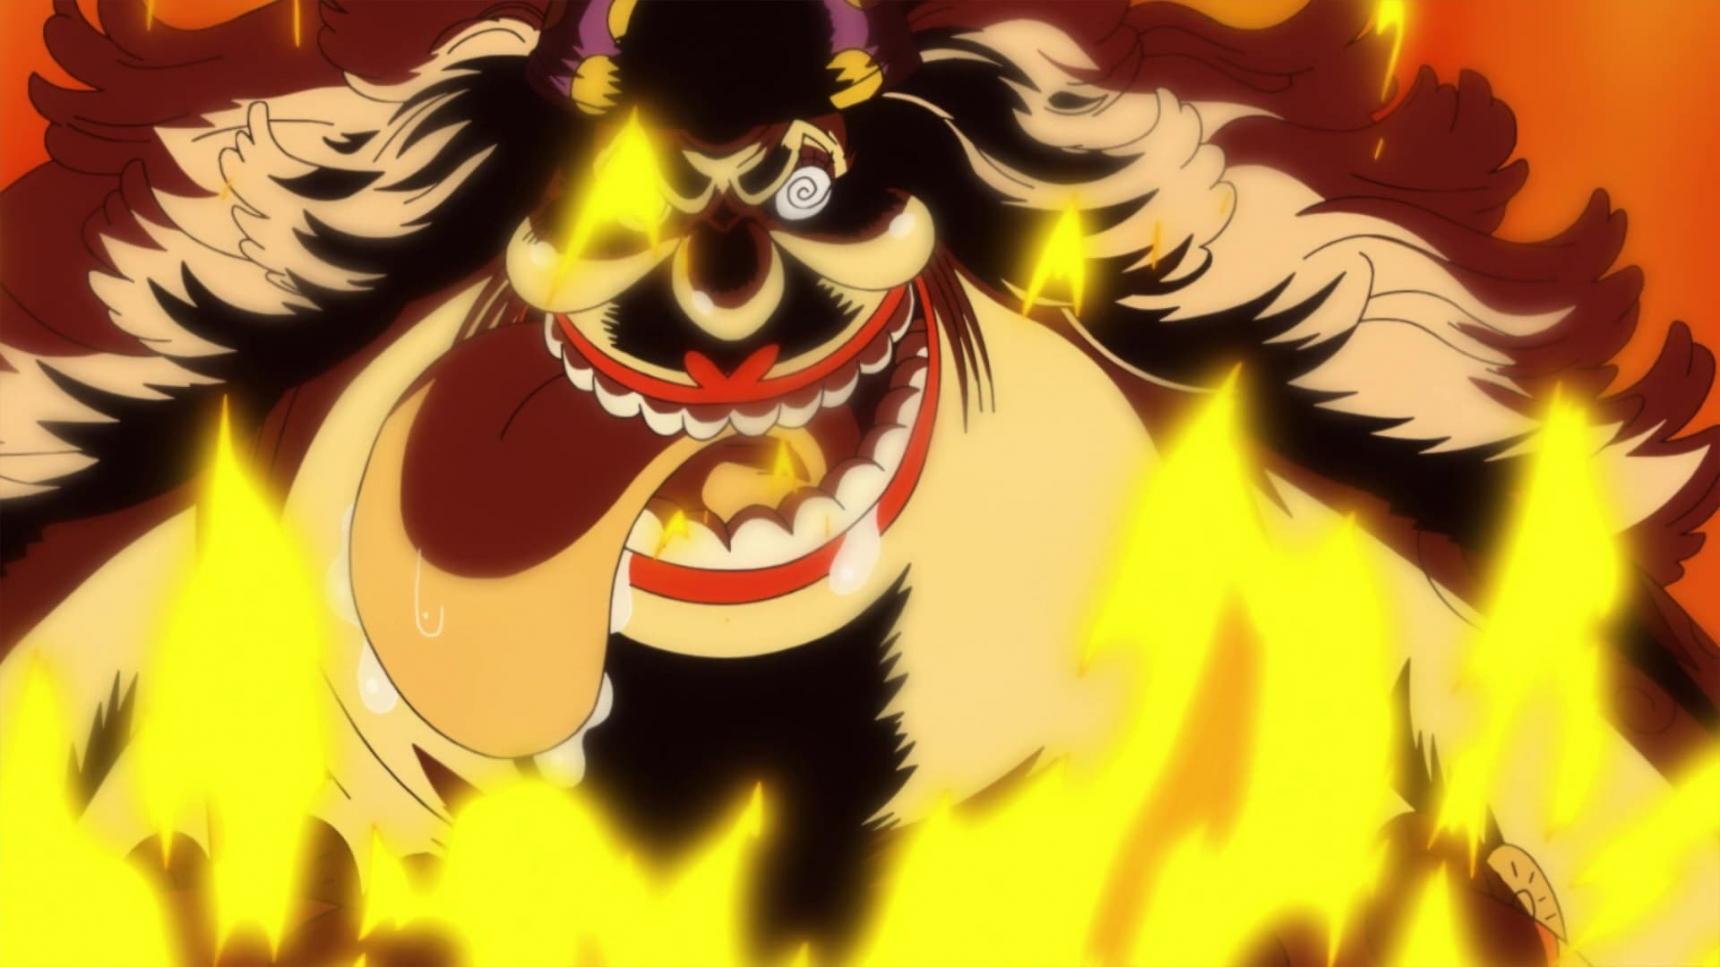 Poster del episodio 846 de One Piece online